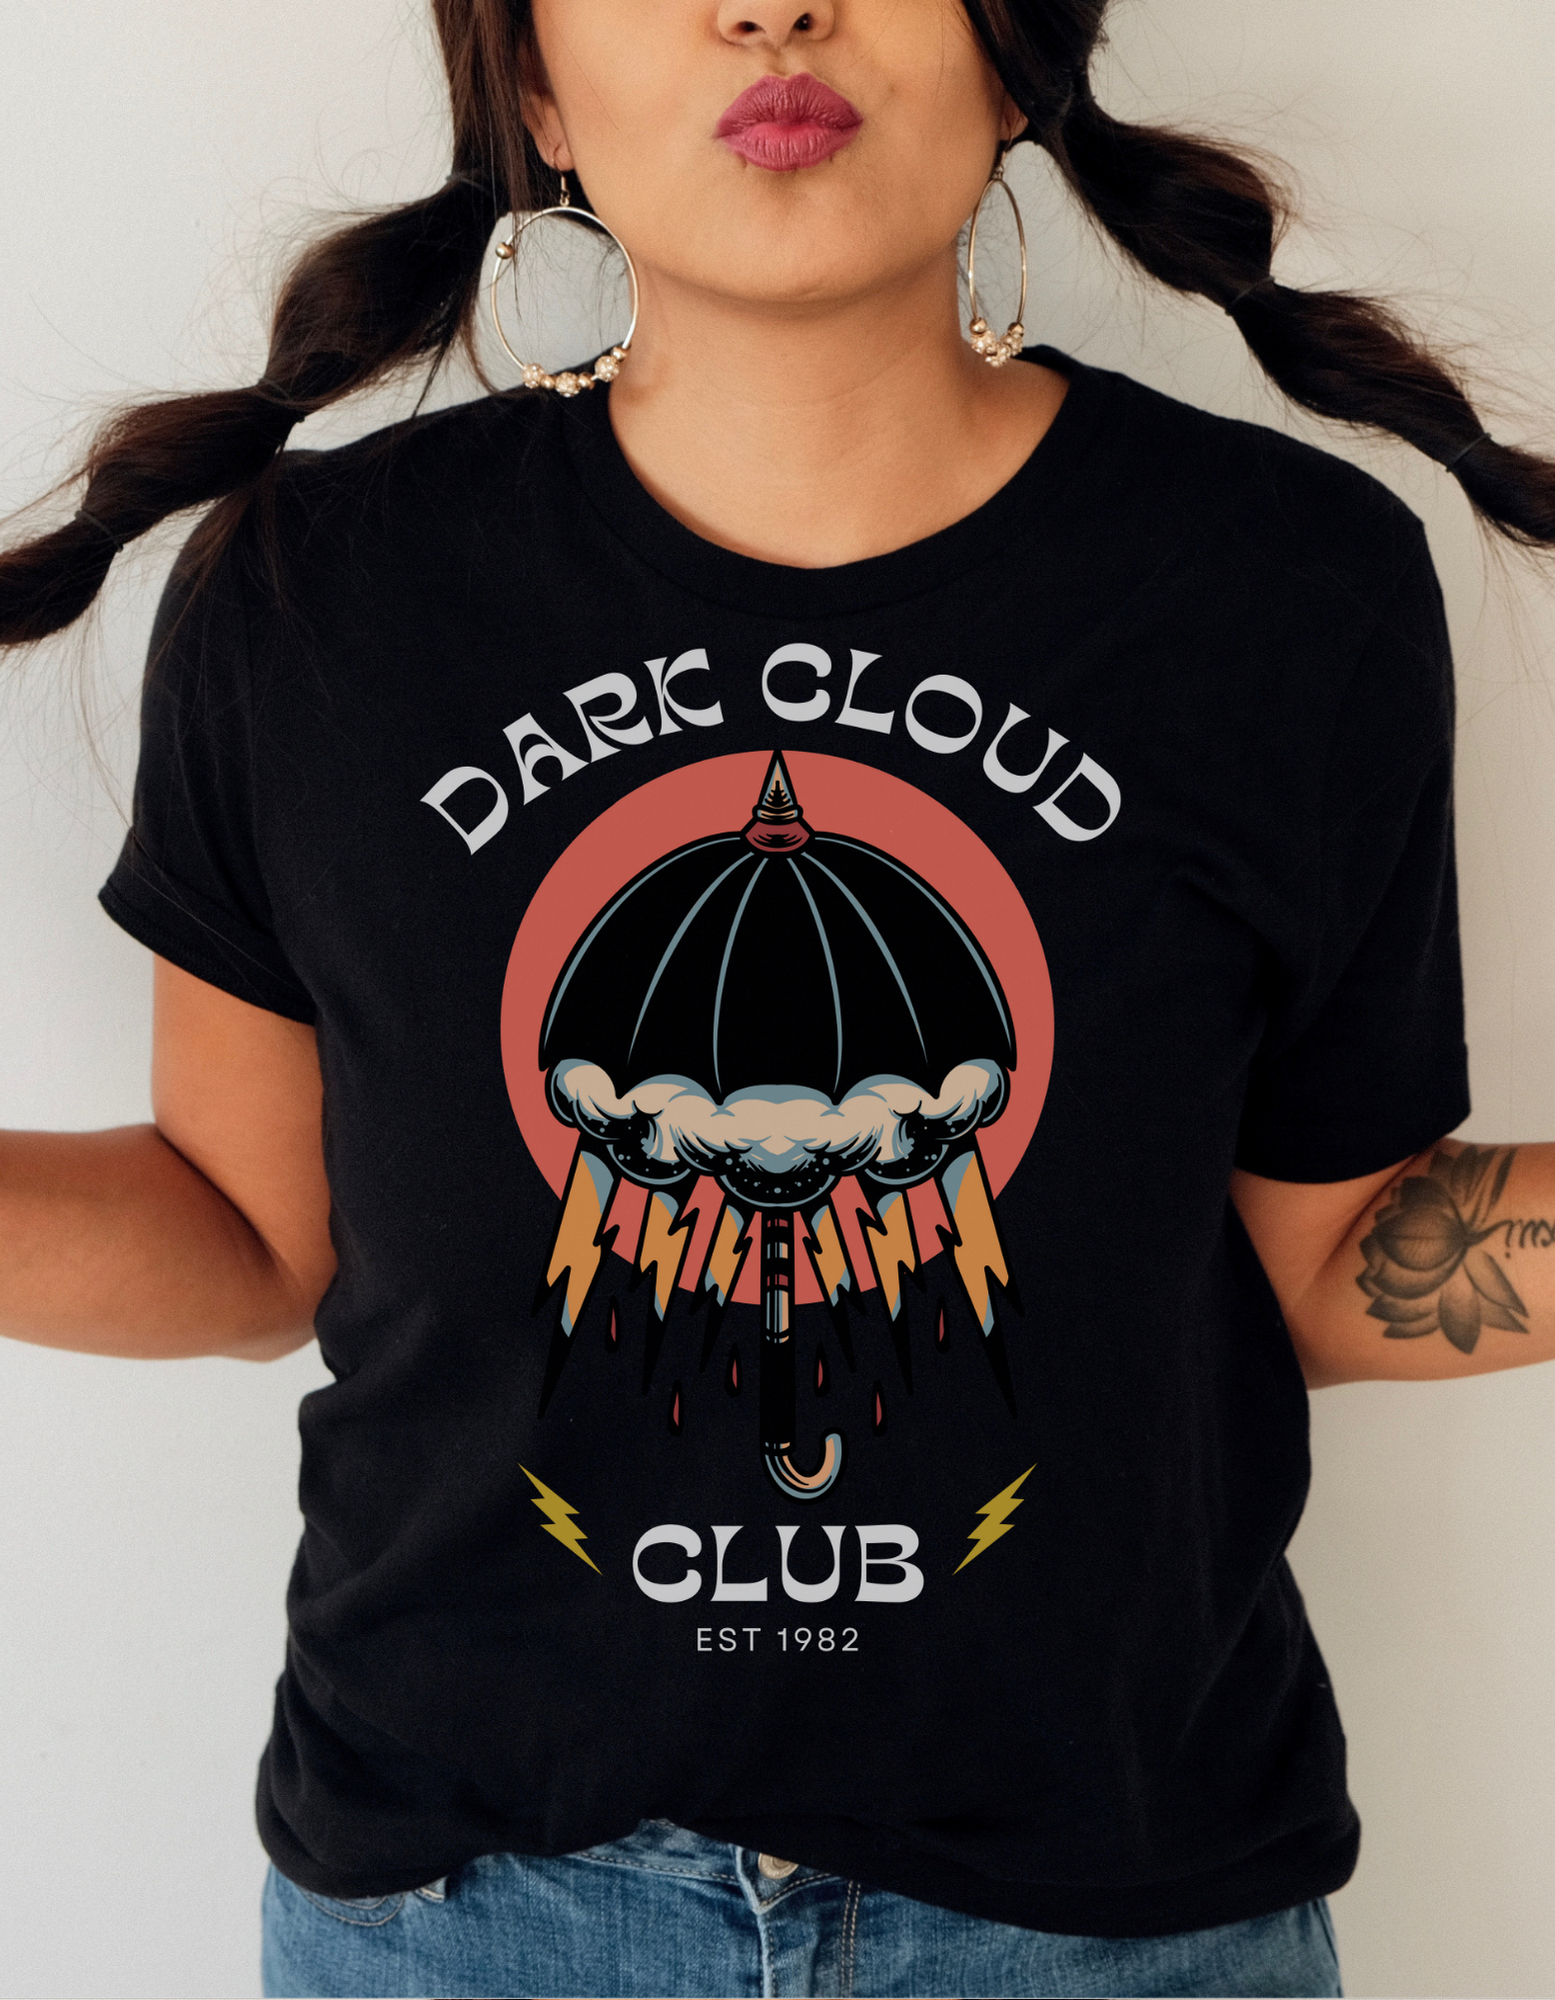 Dark Cloud Club Umbrella Lightning Tattoo T-shirt / Dark Cloud Lightning Eye Unisex Traditional Tattoo Tee Shirt / Punk Rock Clothing Tshirt - Foxlark Crystal Jewelry